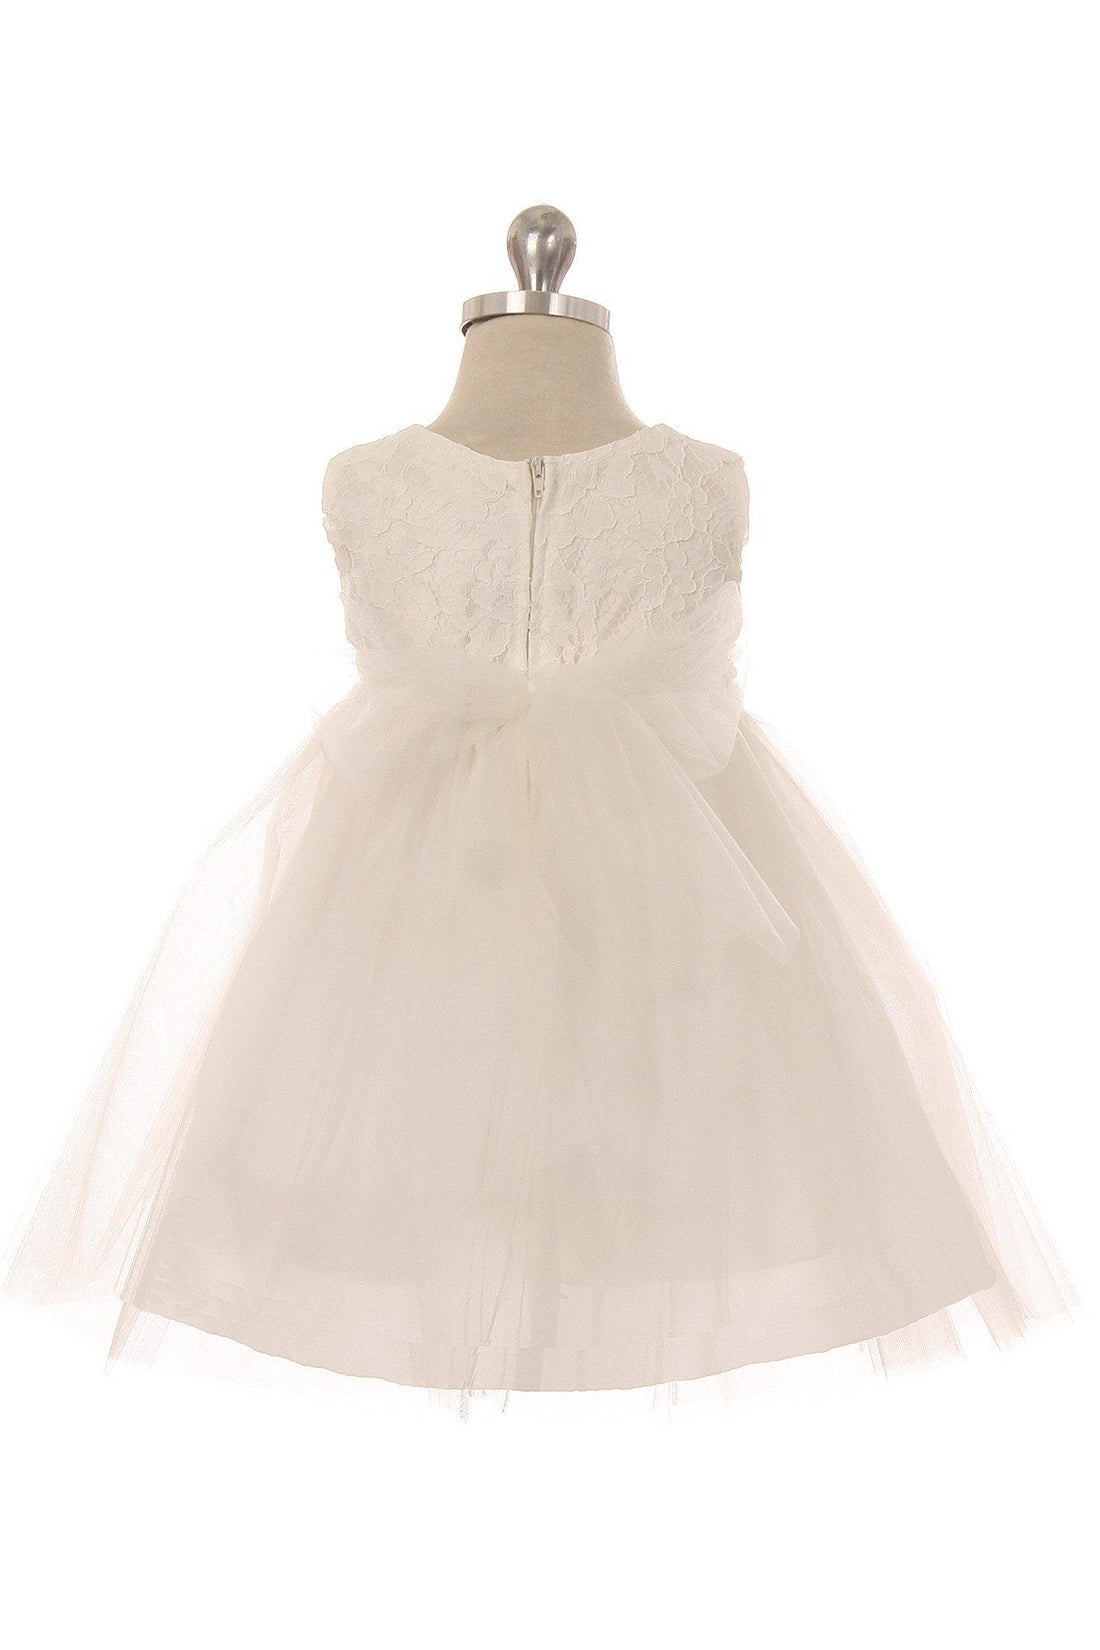 Baby Girl Lace & Mesh Pearl Trim Party Dress - AS456B-B Kids Dream